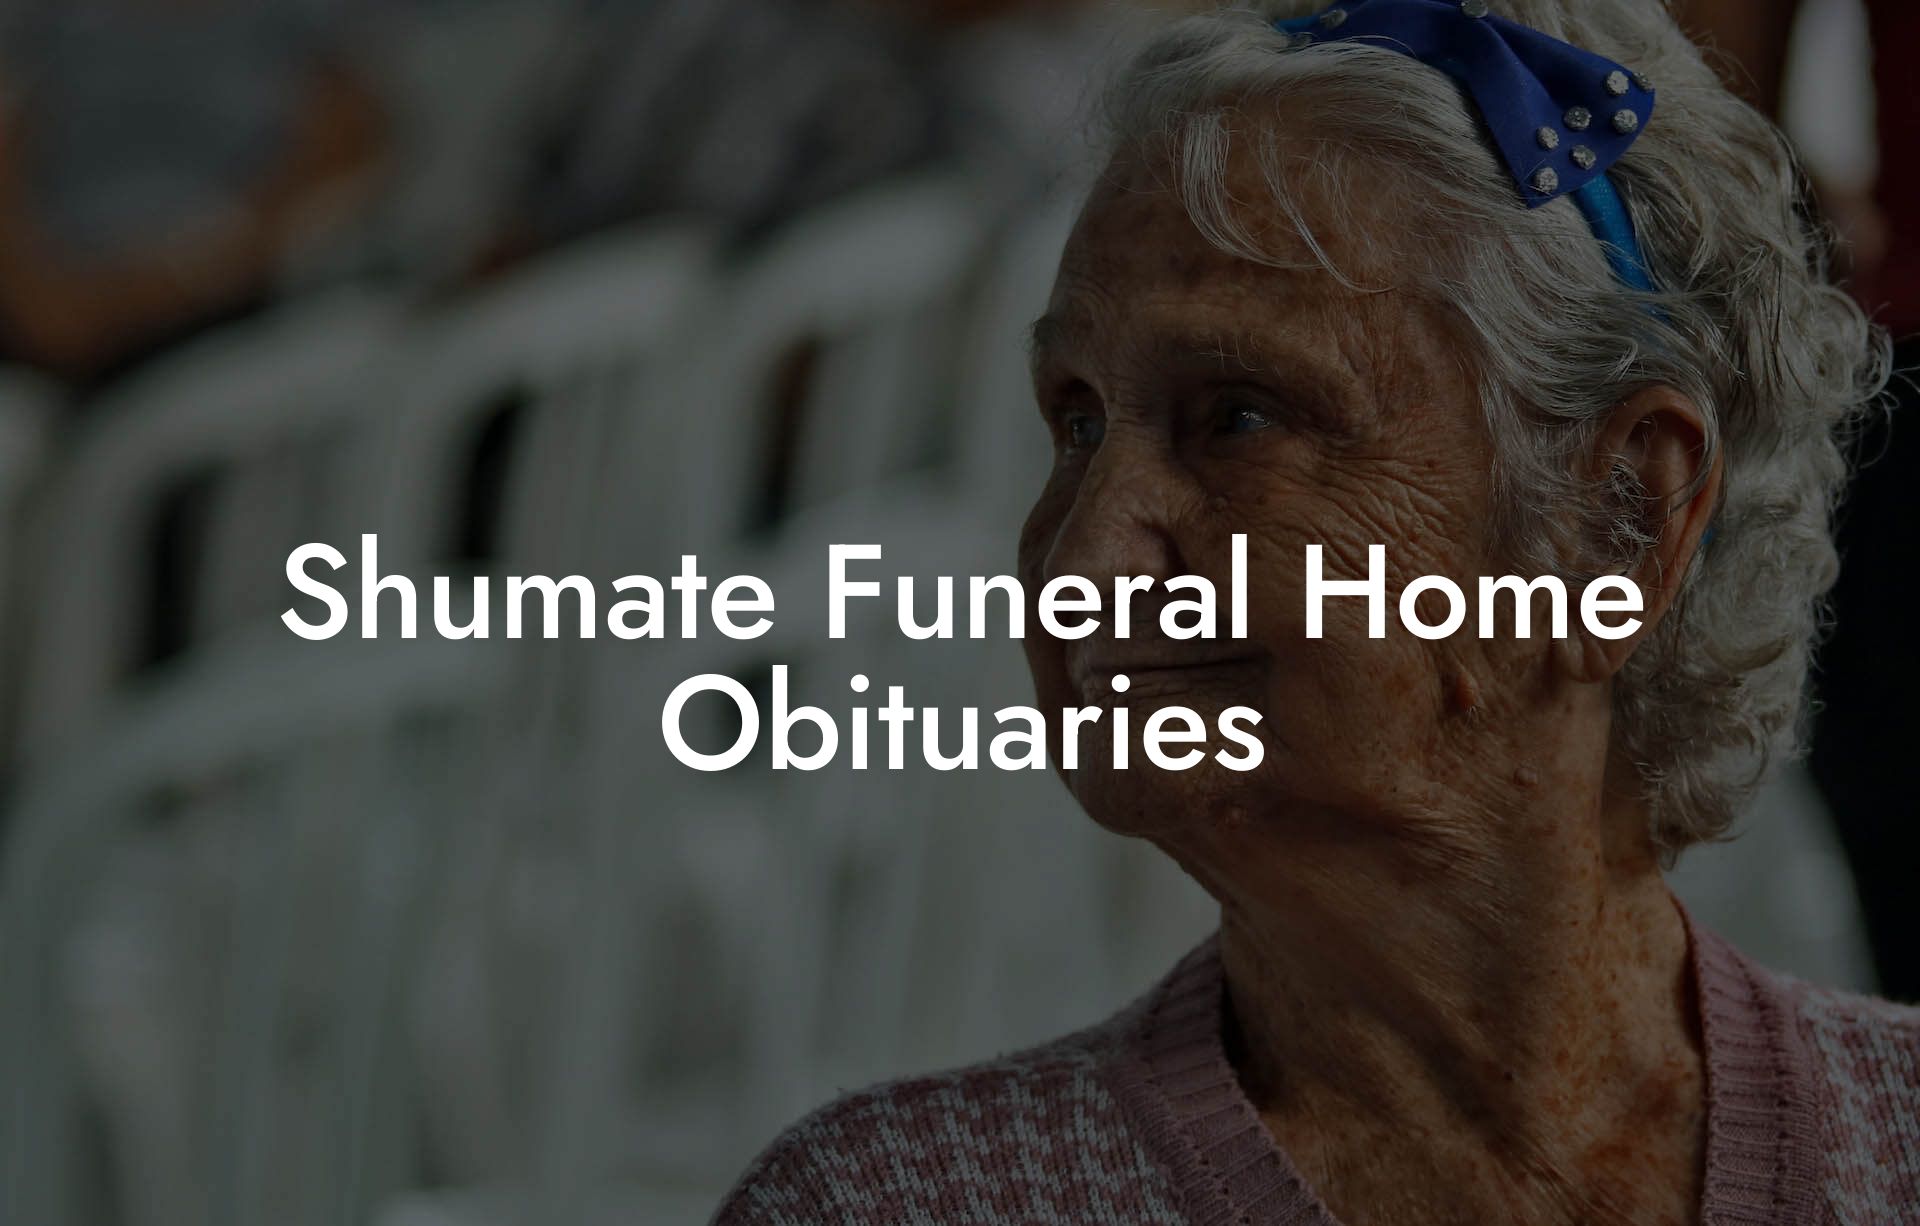 Shumate Funeral Home Obituaries